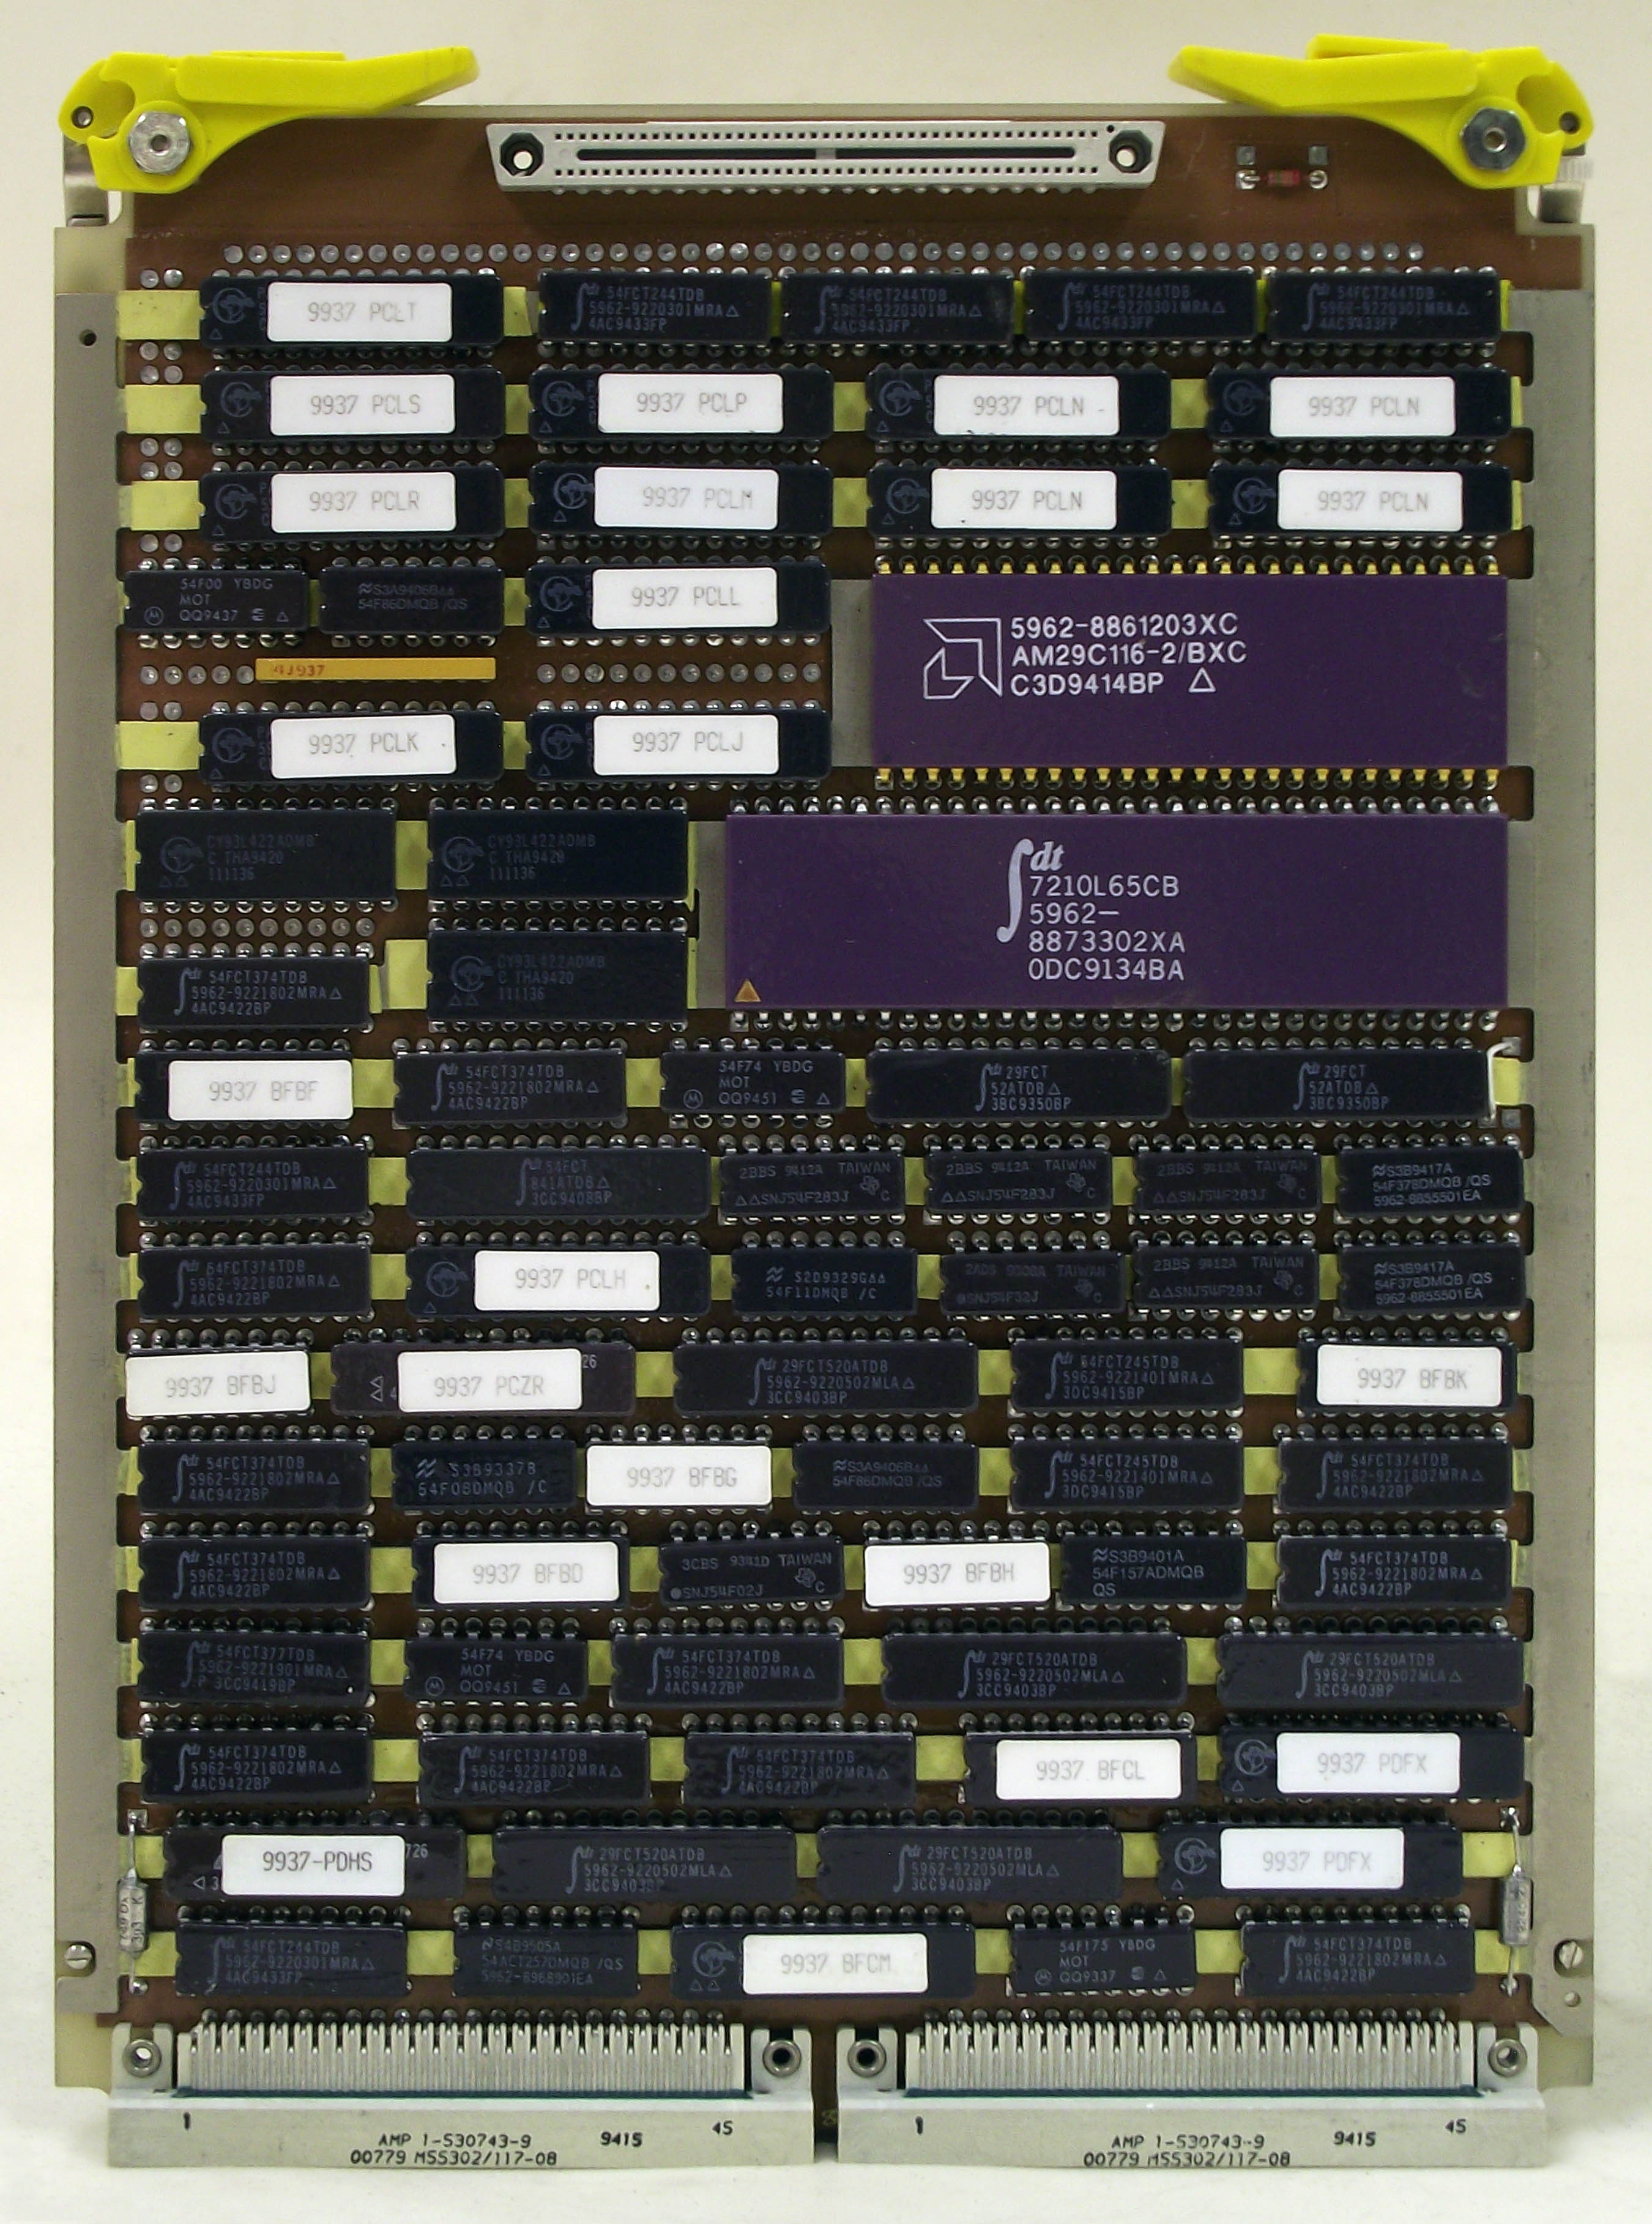 AQS903 FFP3 Circuit Board